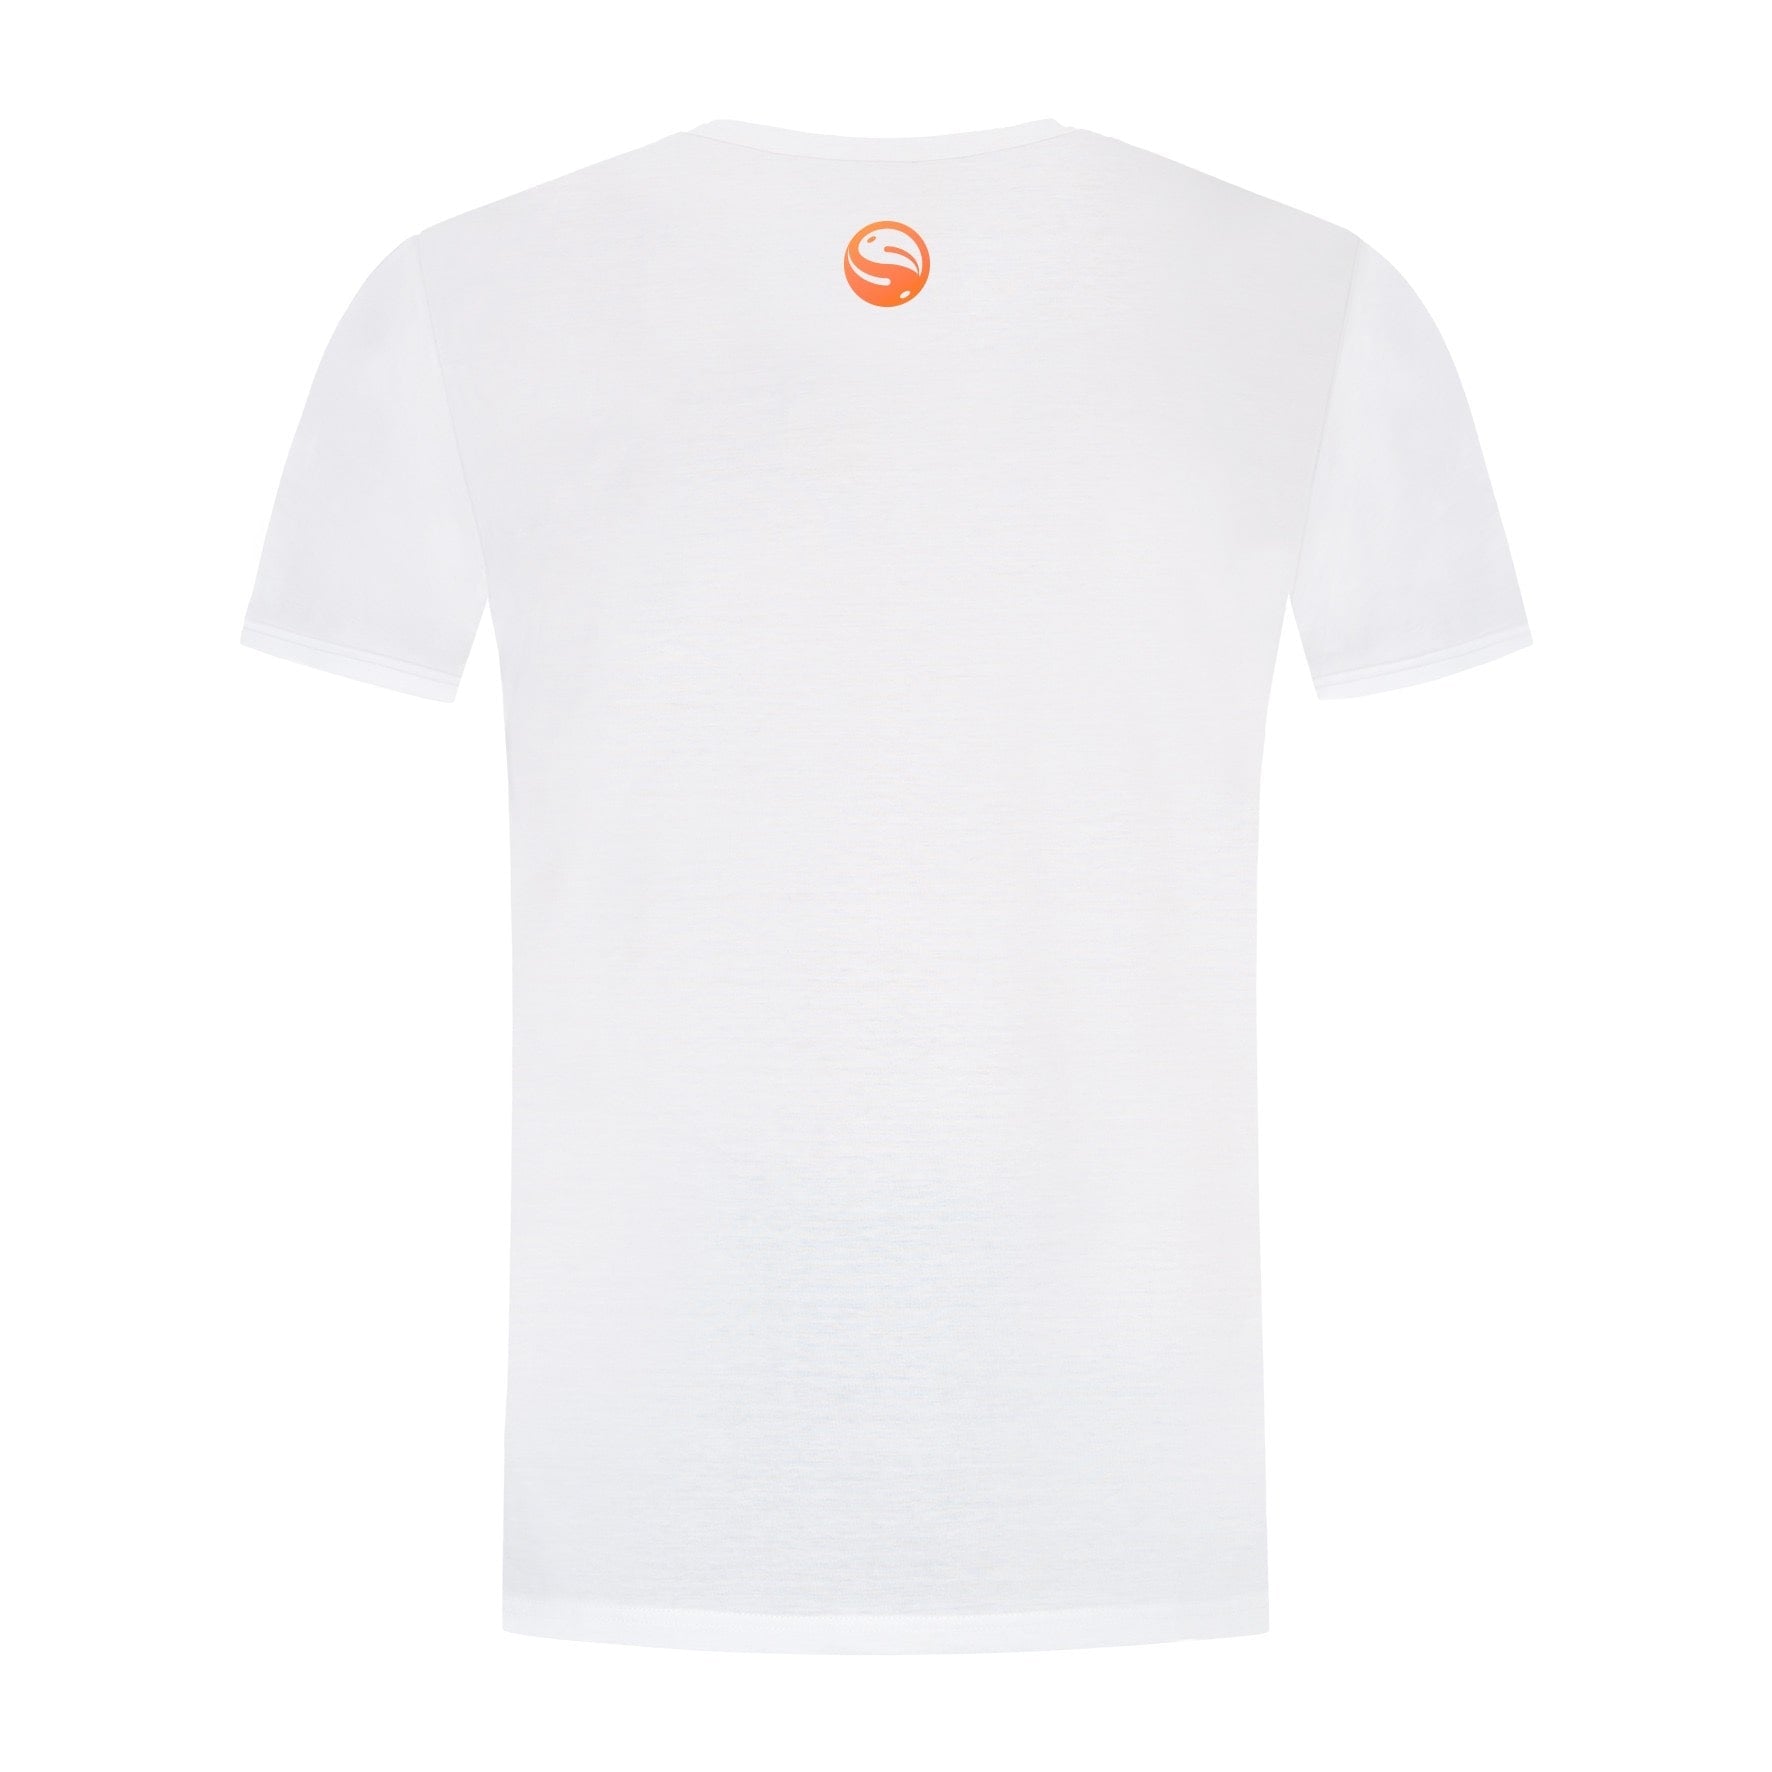 Guru gradient connect tee white - t-shirt